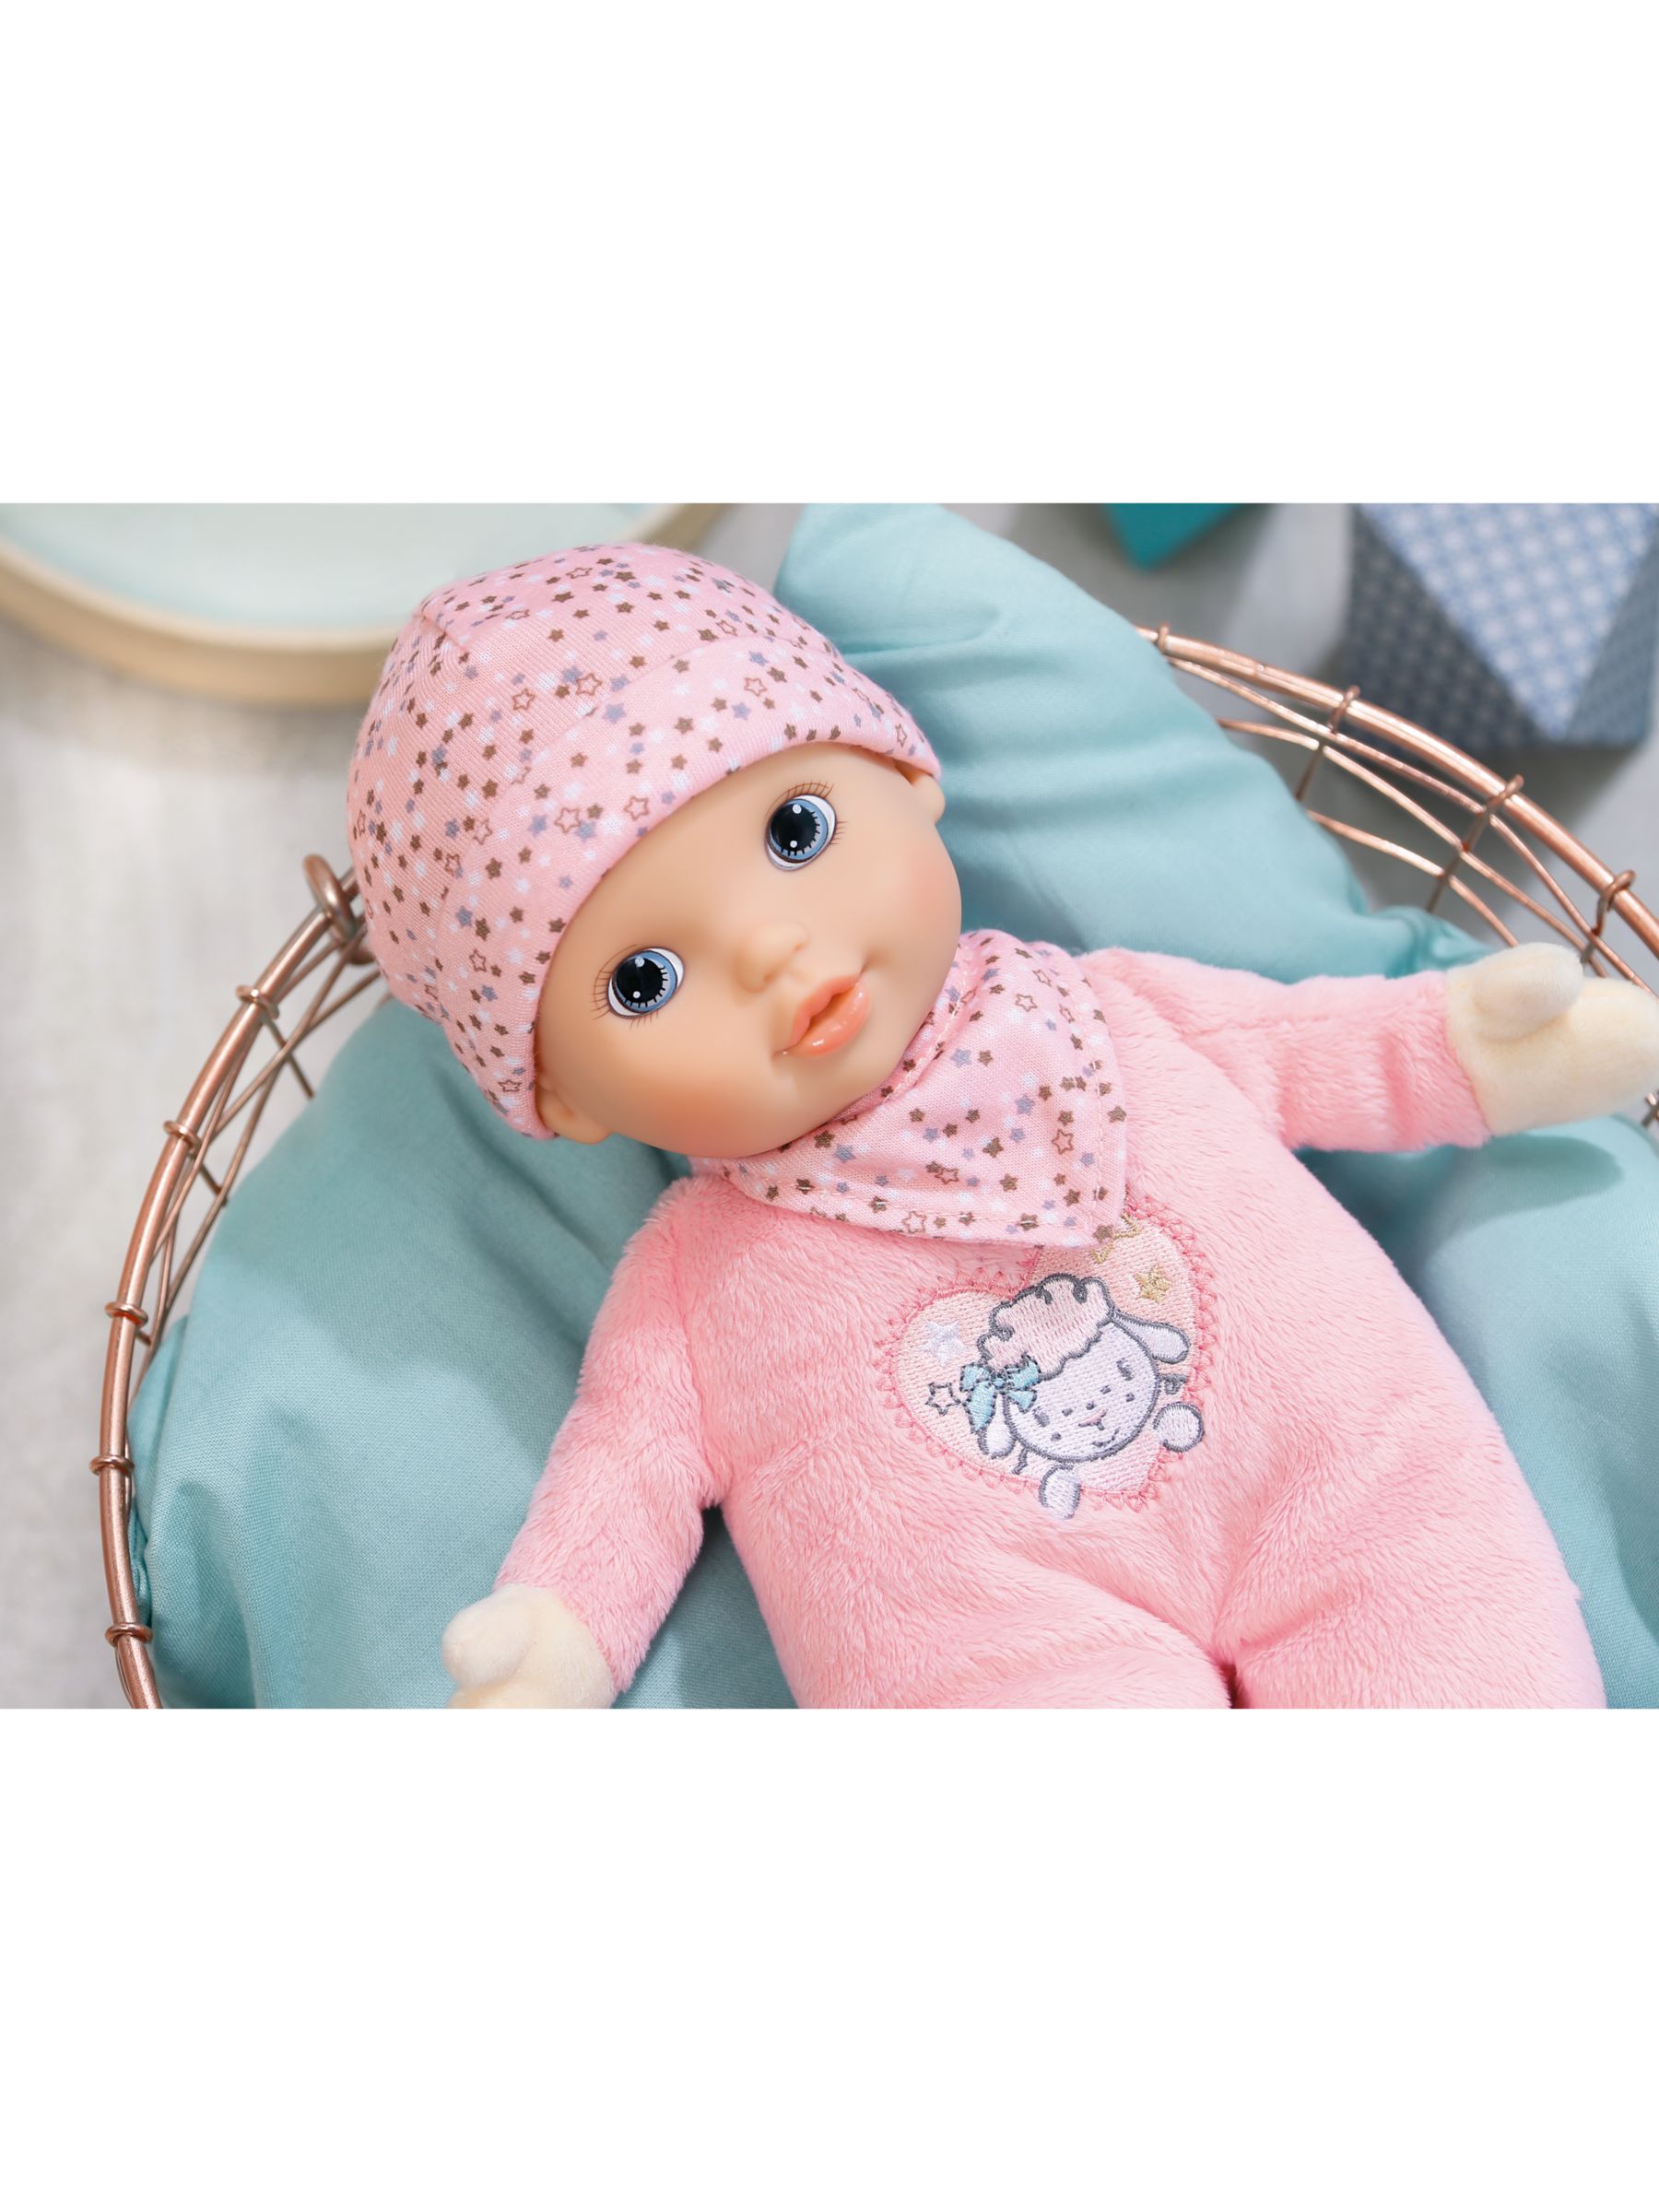 baby heartbeat doll